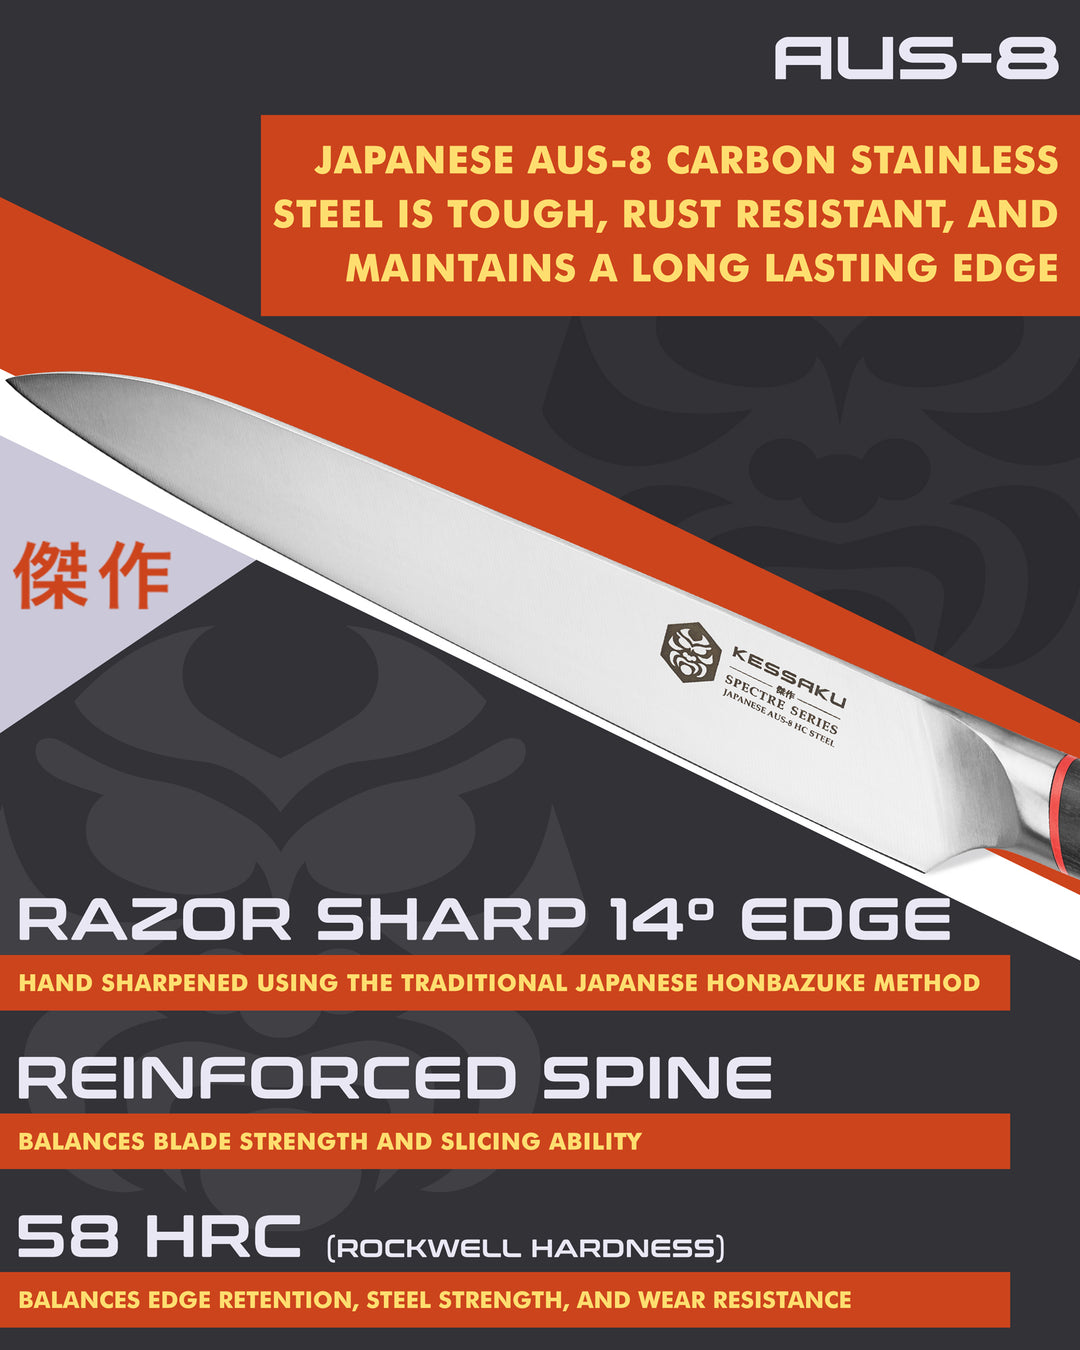 Kessaku Spectre Slicing Knife blade features: AUS-8 steel, 58 HRC, 14 degree edge, reinforced spine